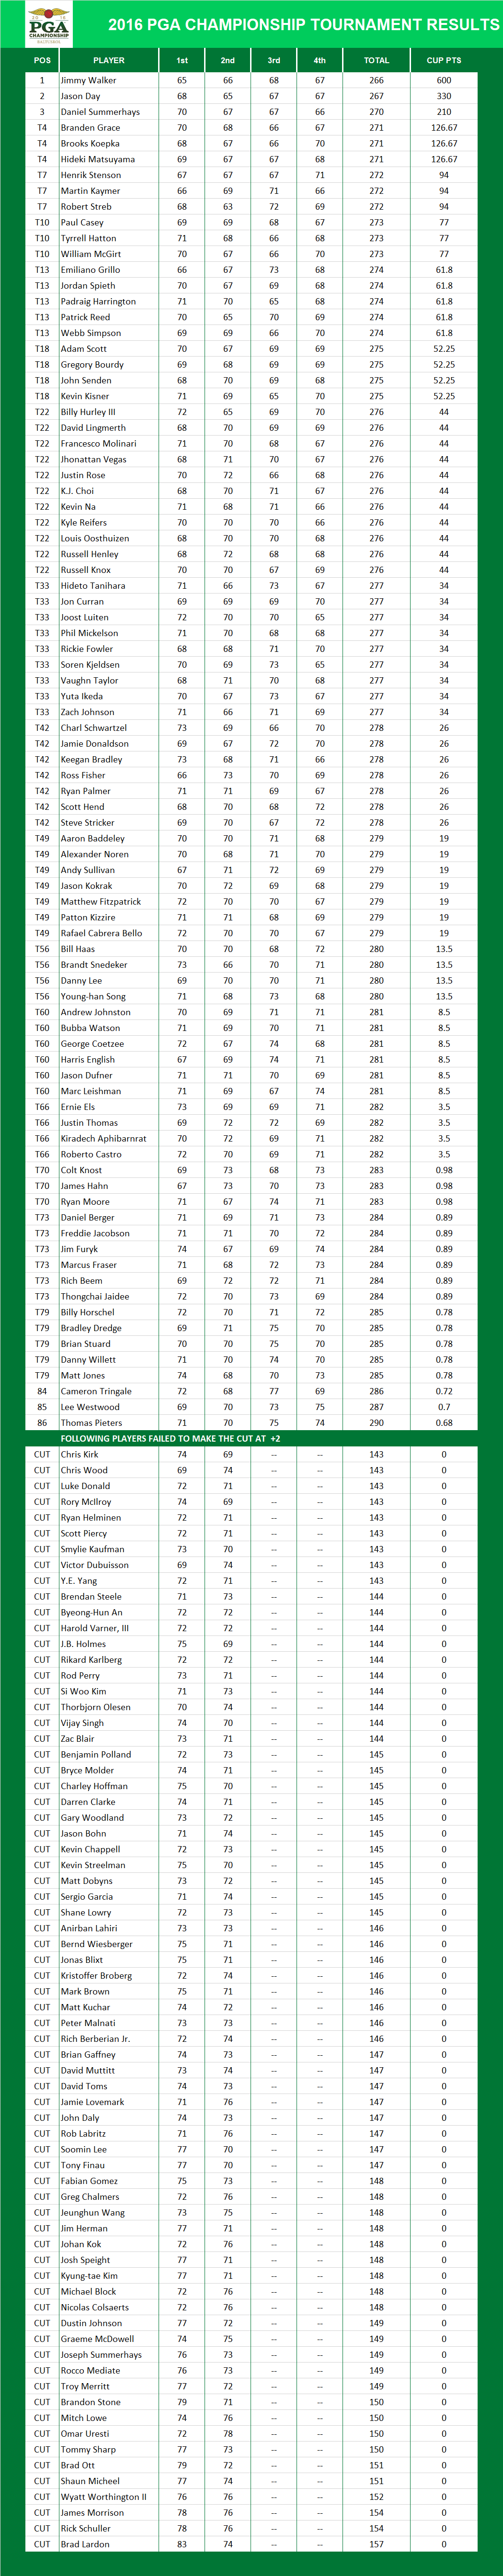 2016 PGA Championship Results